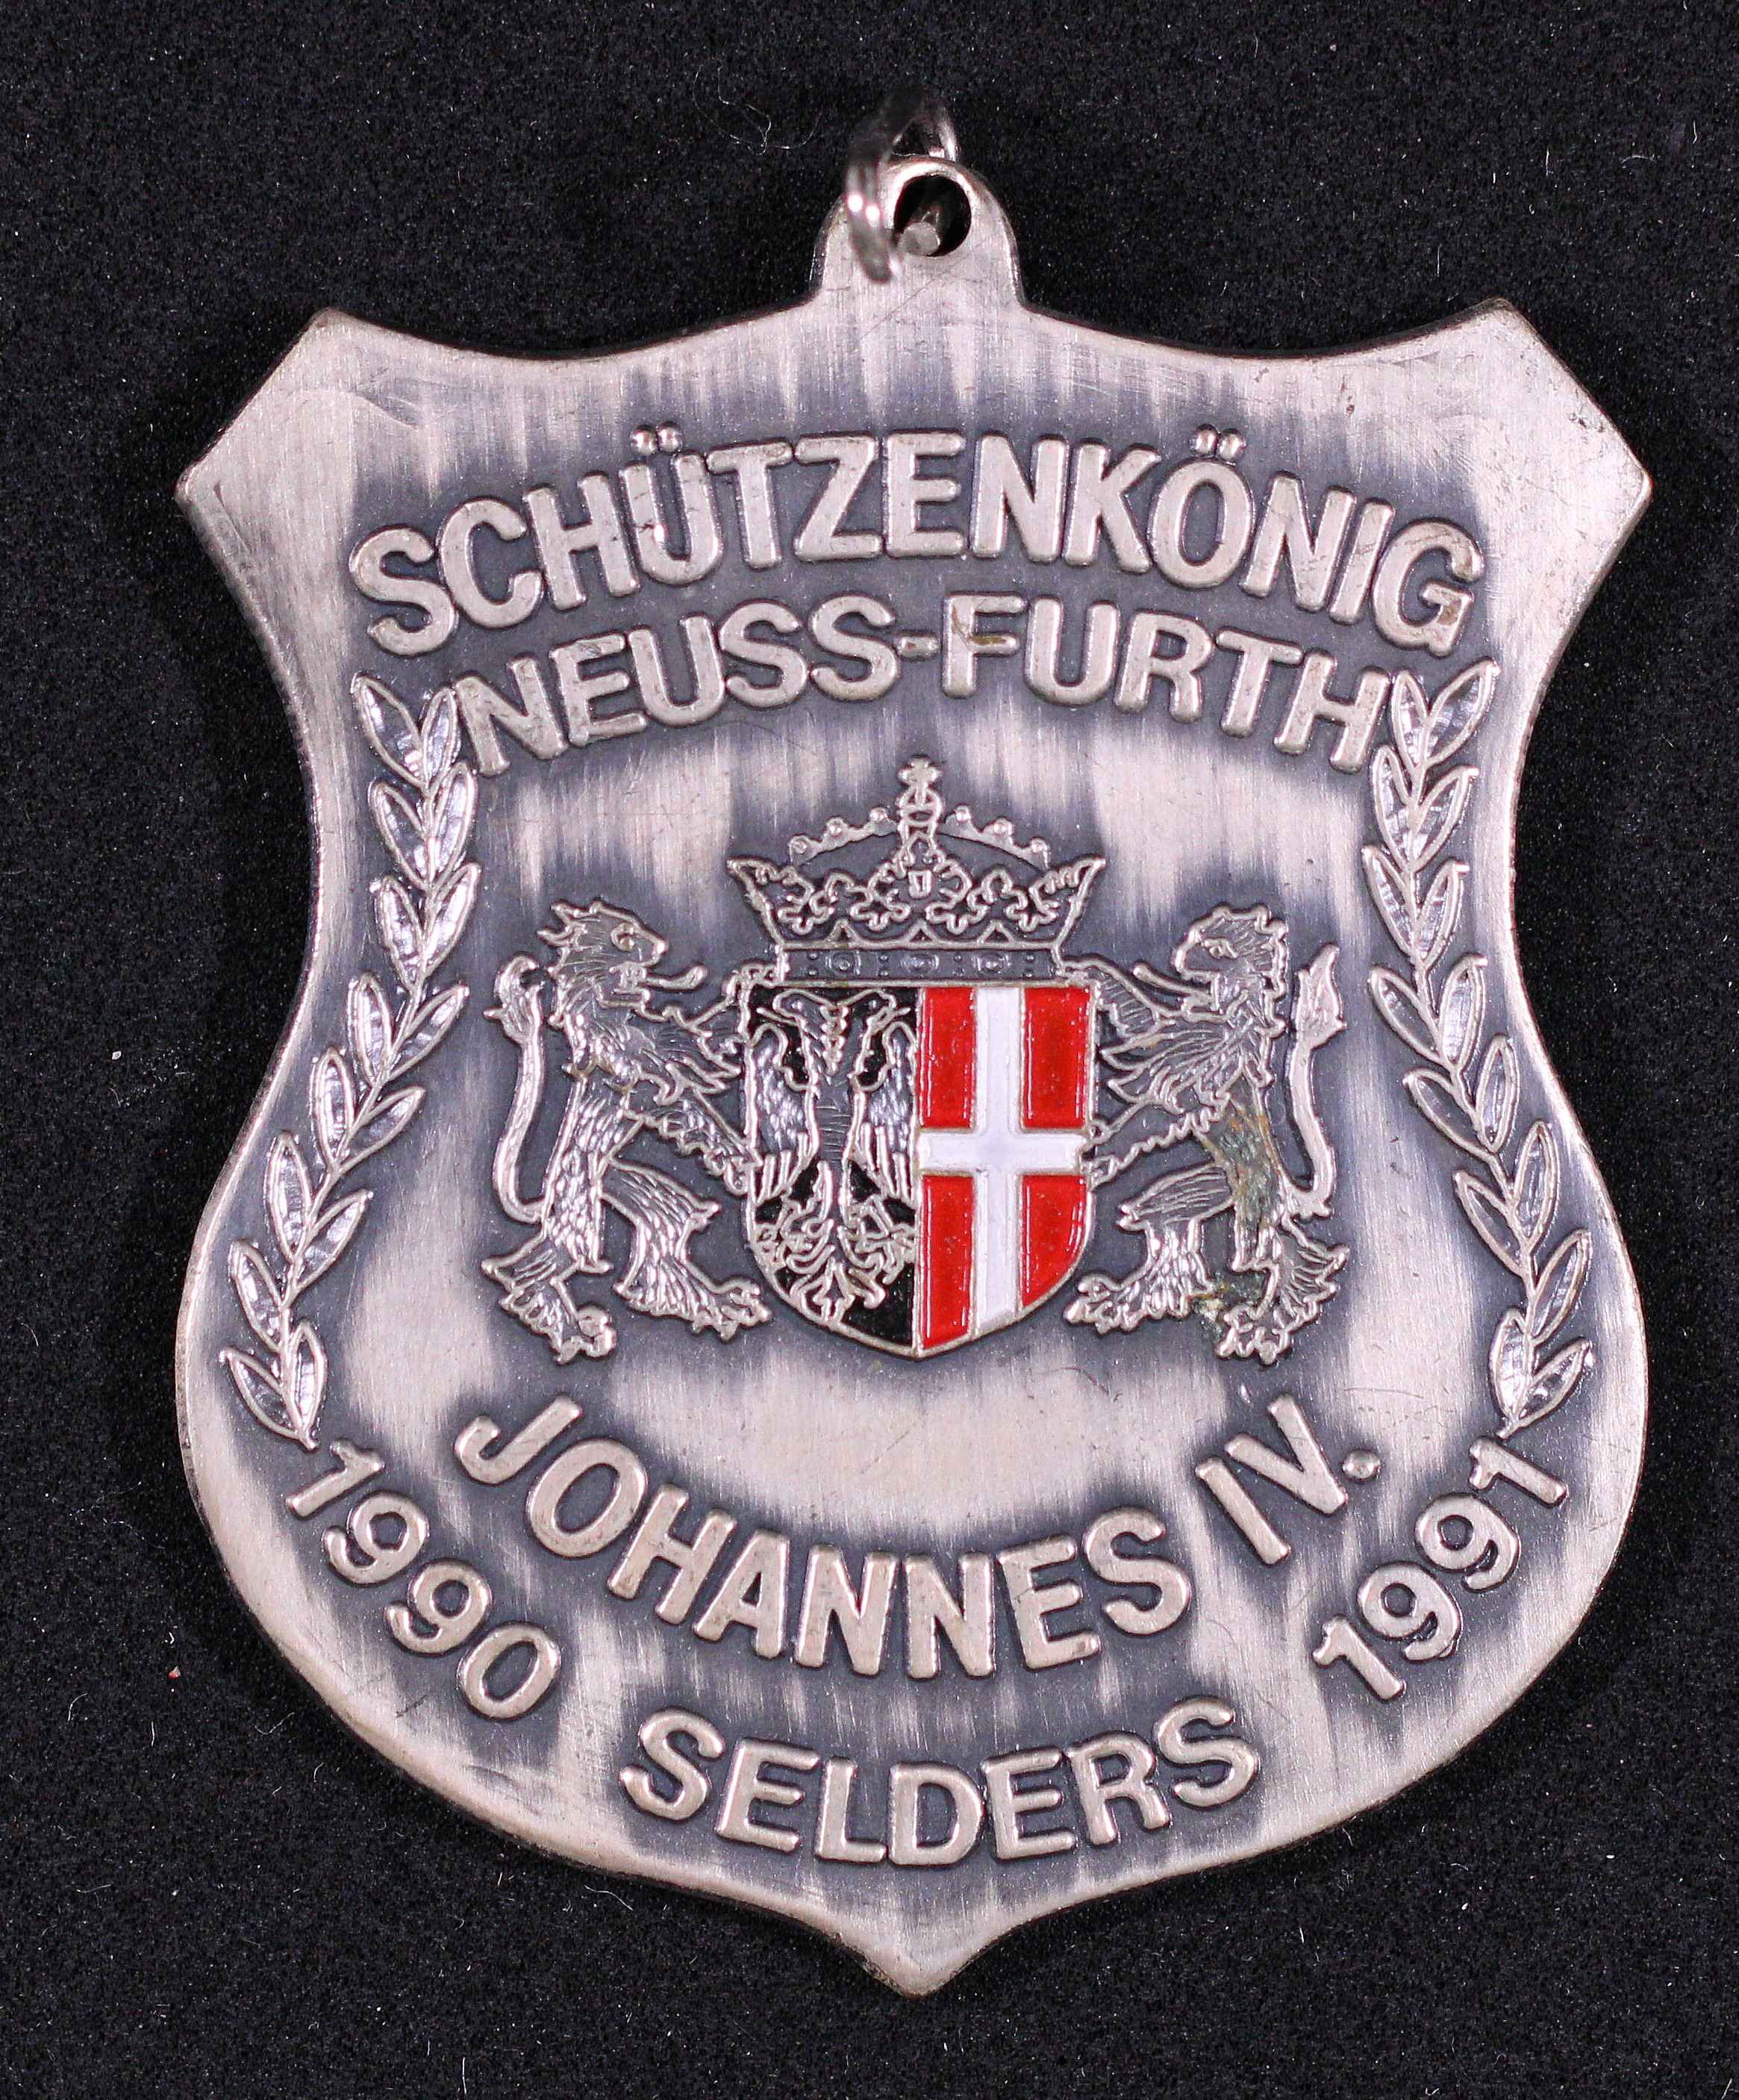 Orden Schützenkönig Neuss-Furth 1990/91 Johannes Selders VS (Rheinisches Schützenmuseum Neuss CC BY-NC-SA)